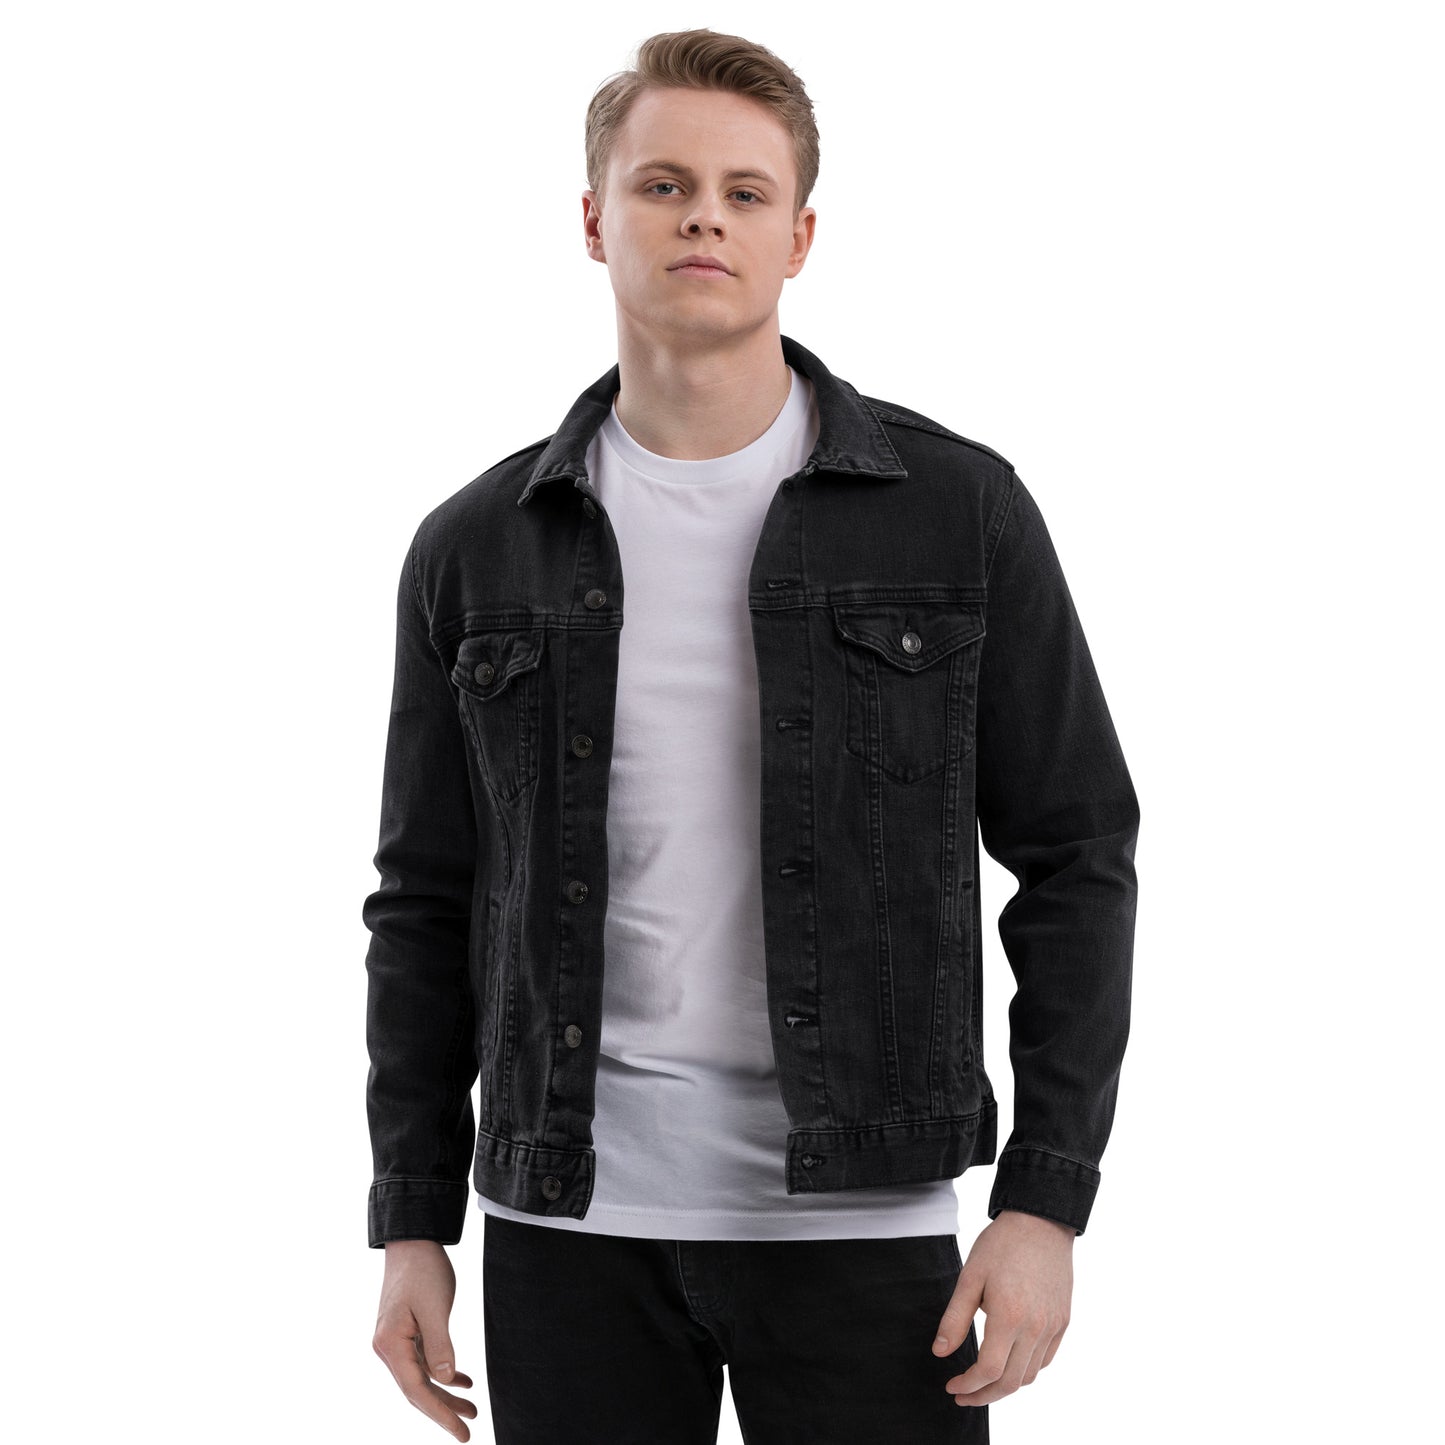 W001 - Unisex denim jacket (black)